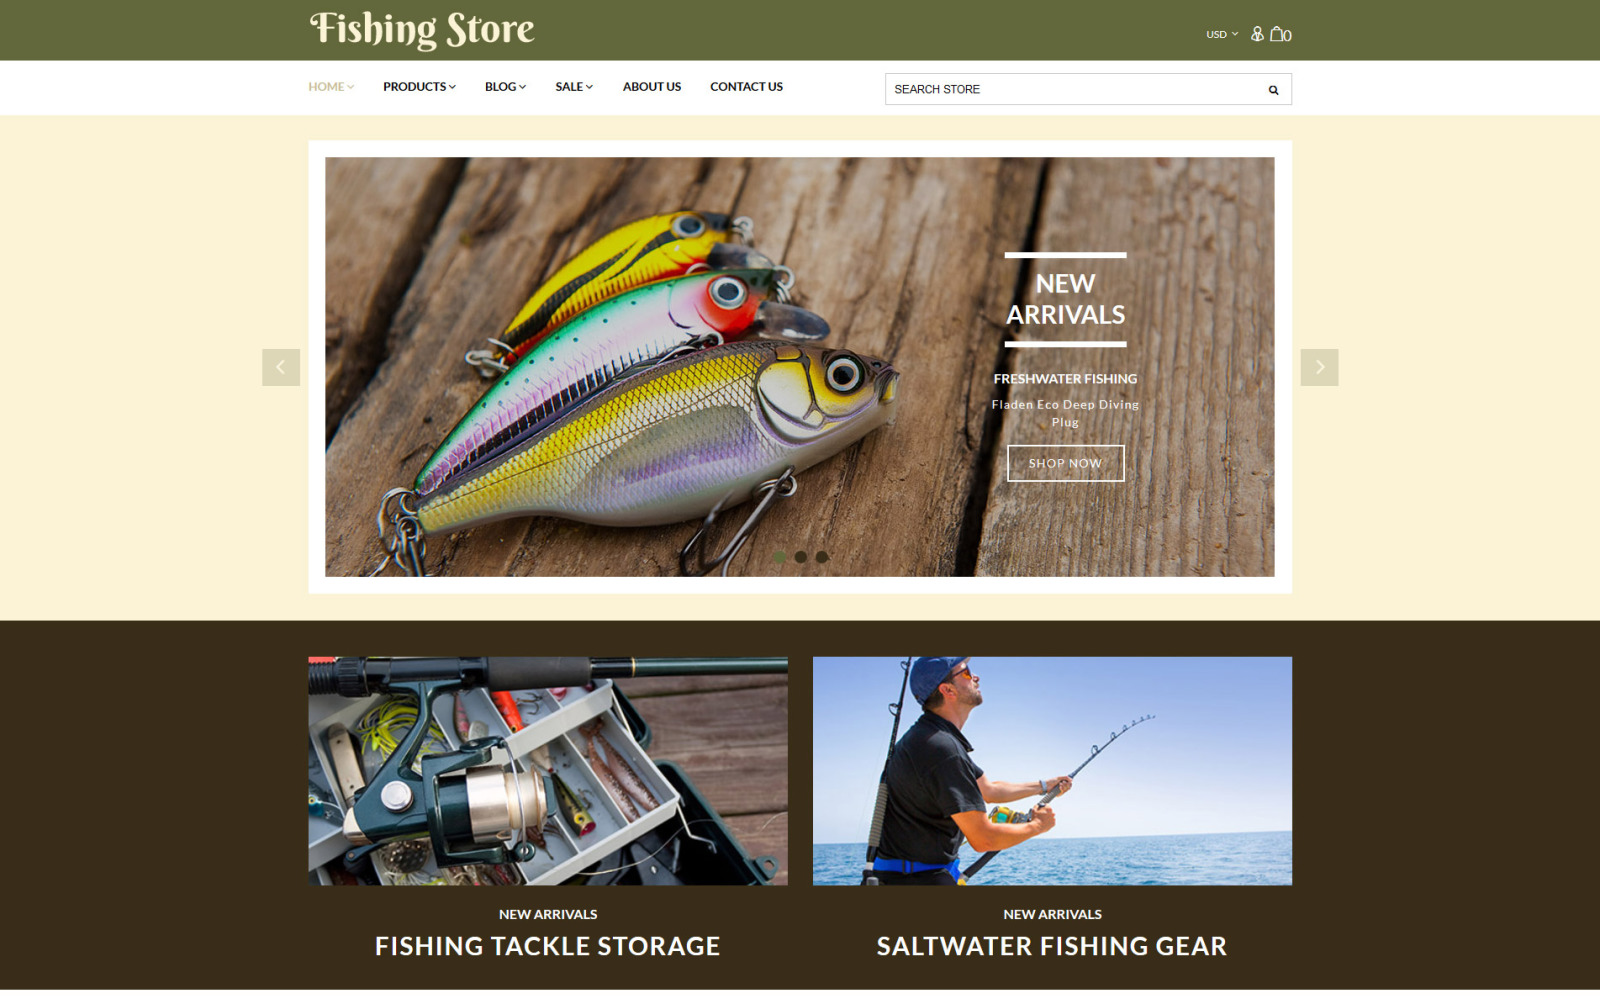 Fishing Store - Fishing Supplies & Equipment Shopify Theme